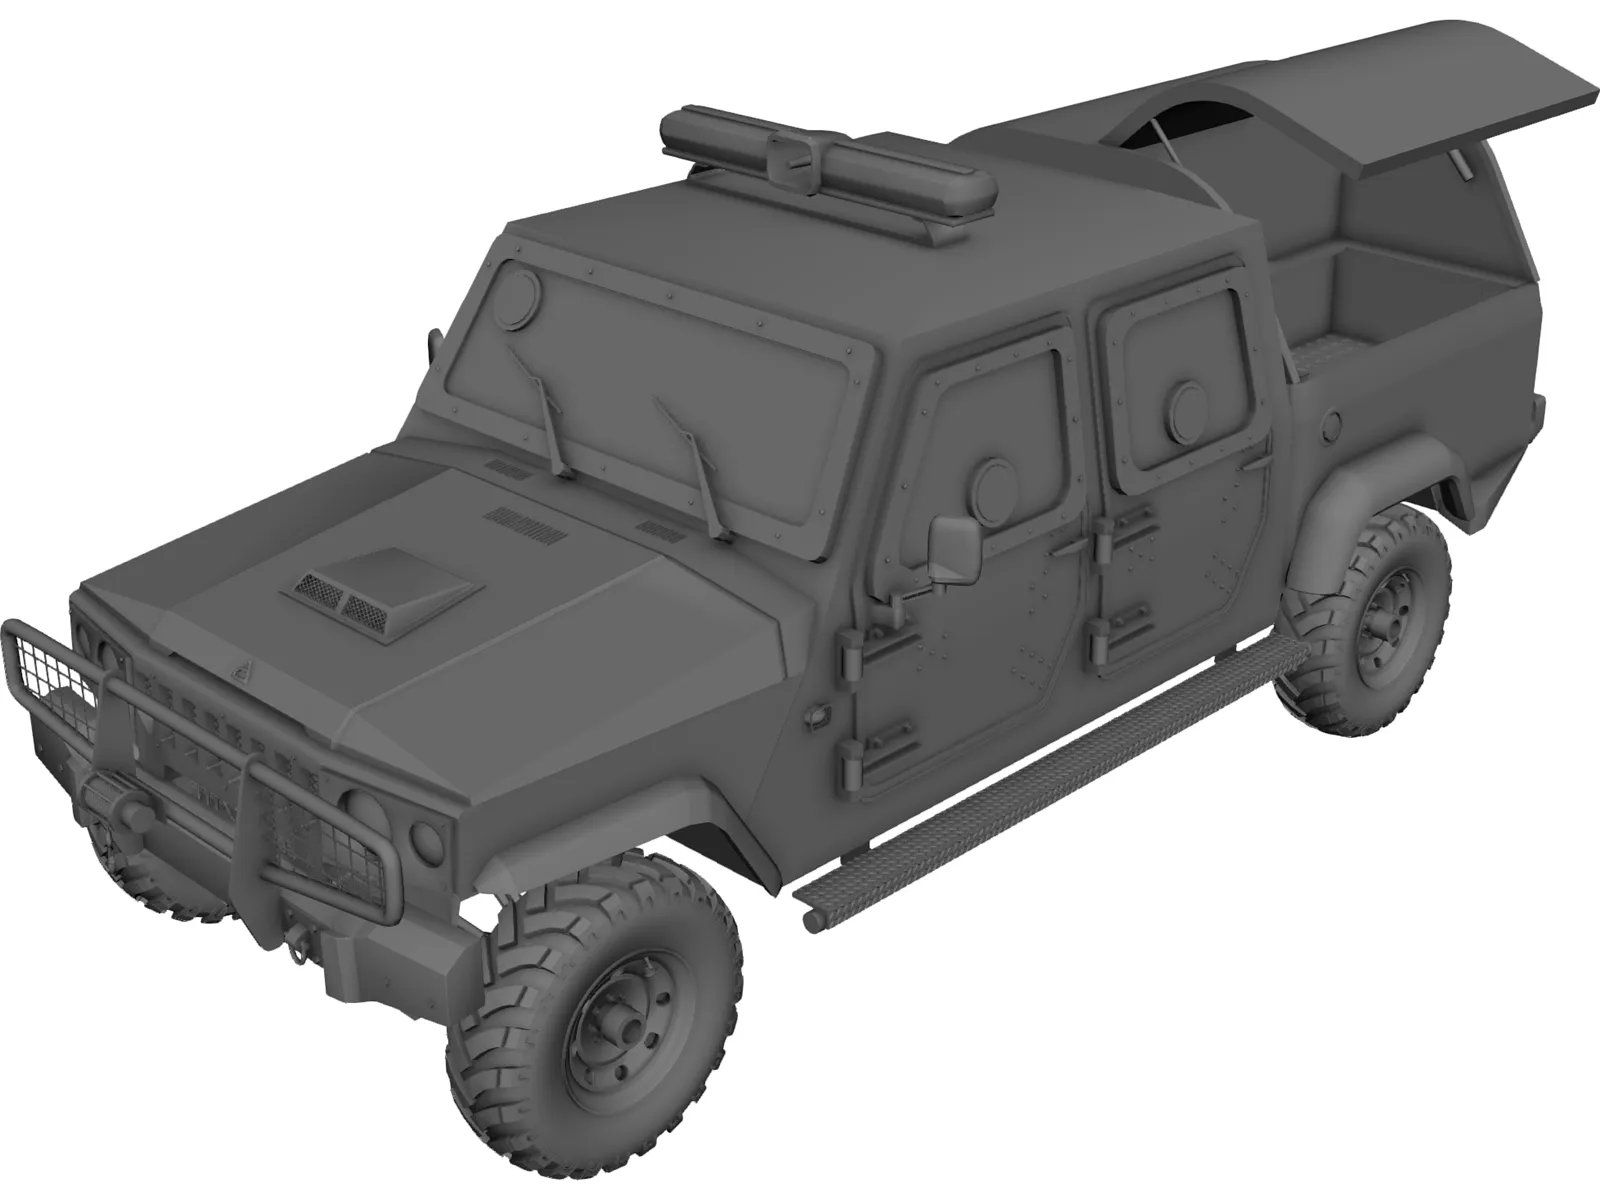 Jeep Agrale C.I.T (Cash in Transit) 3D Model